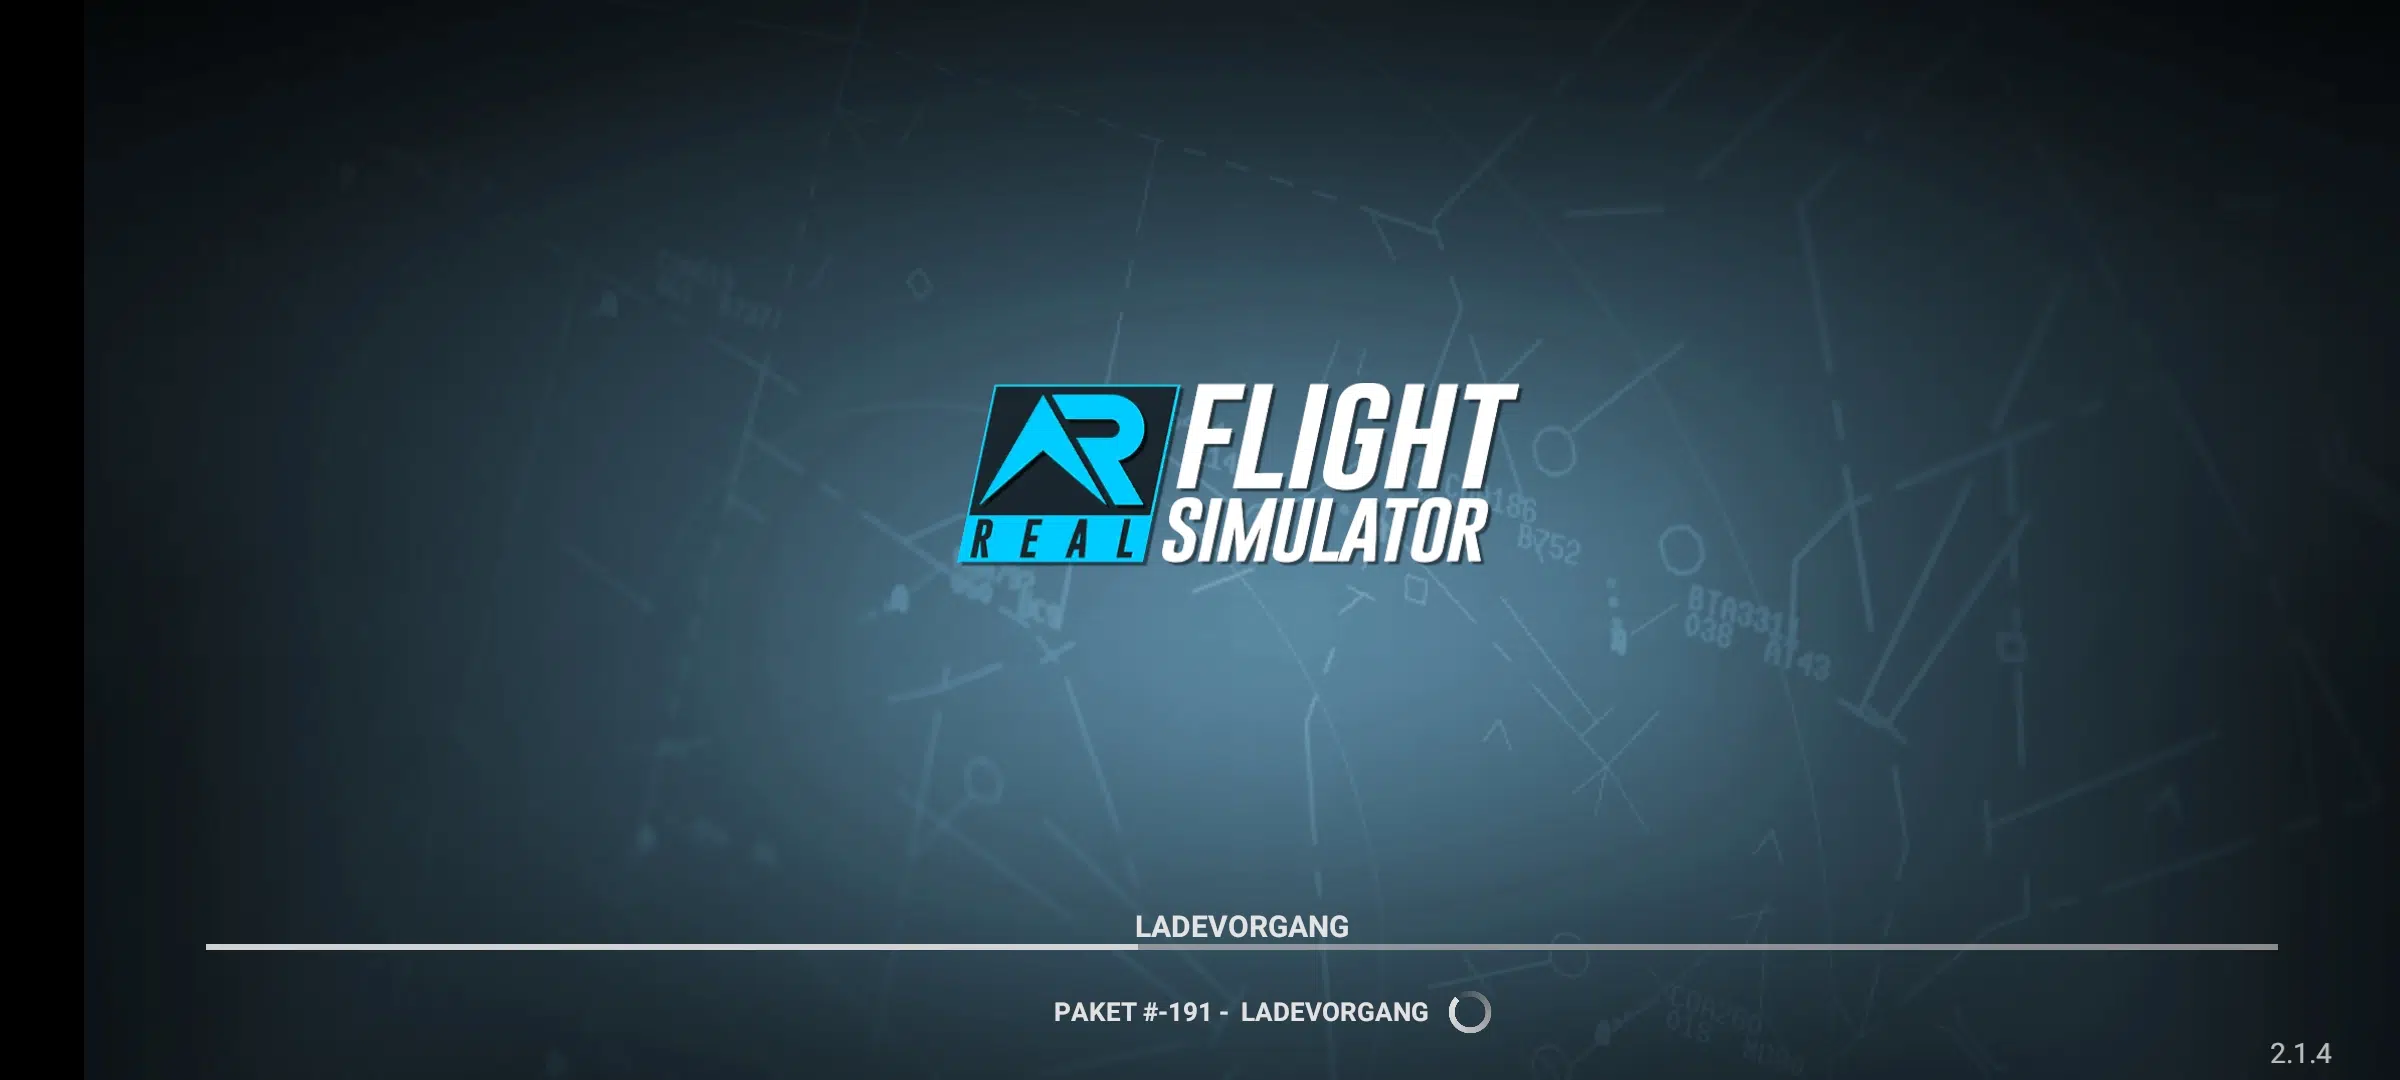 rfs - real flight simulator download latest version - APK + OBB Android